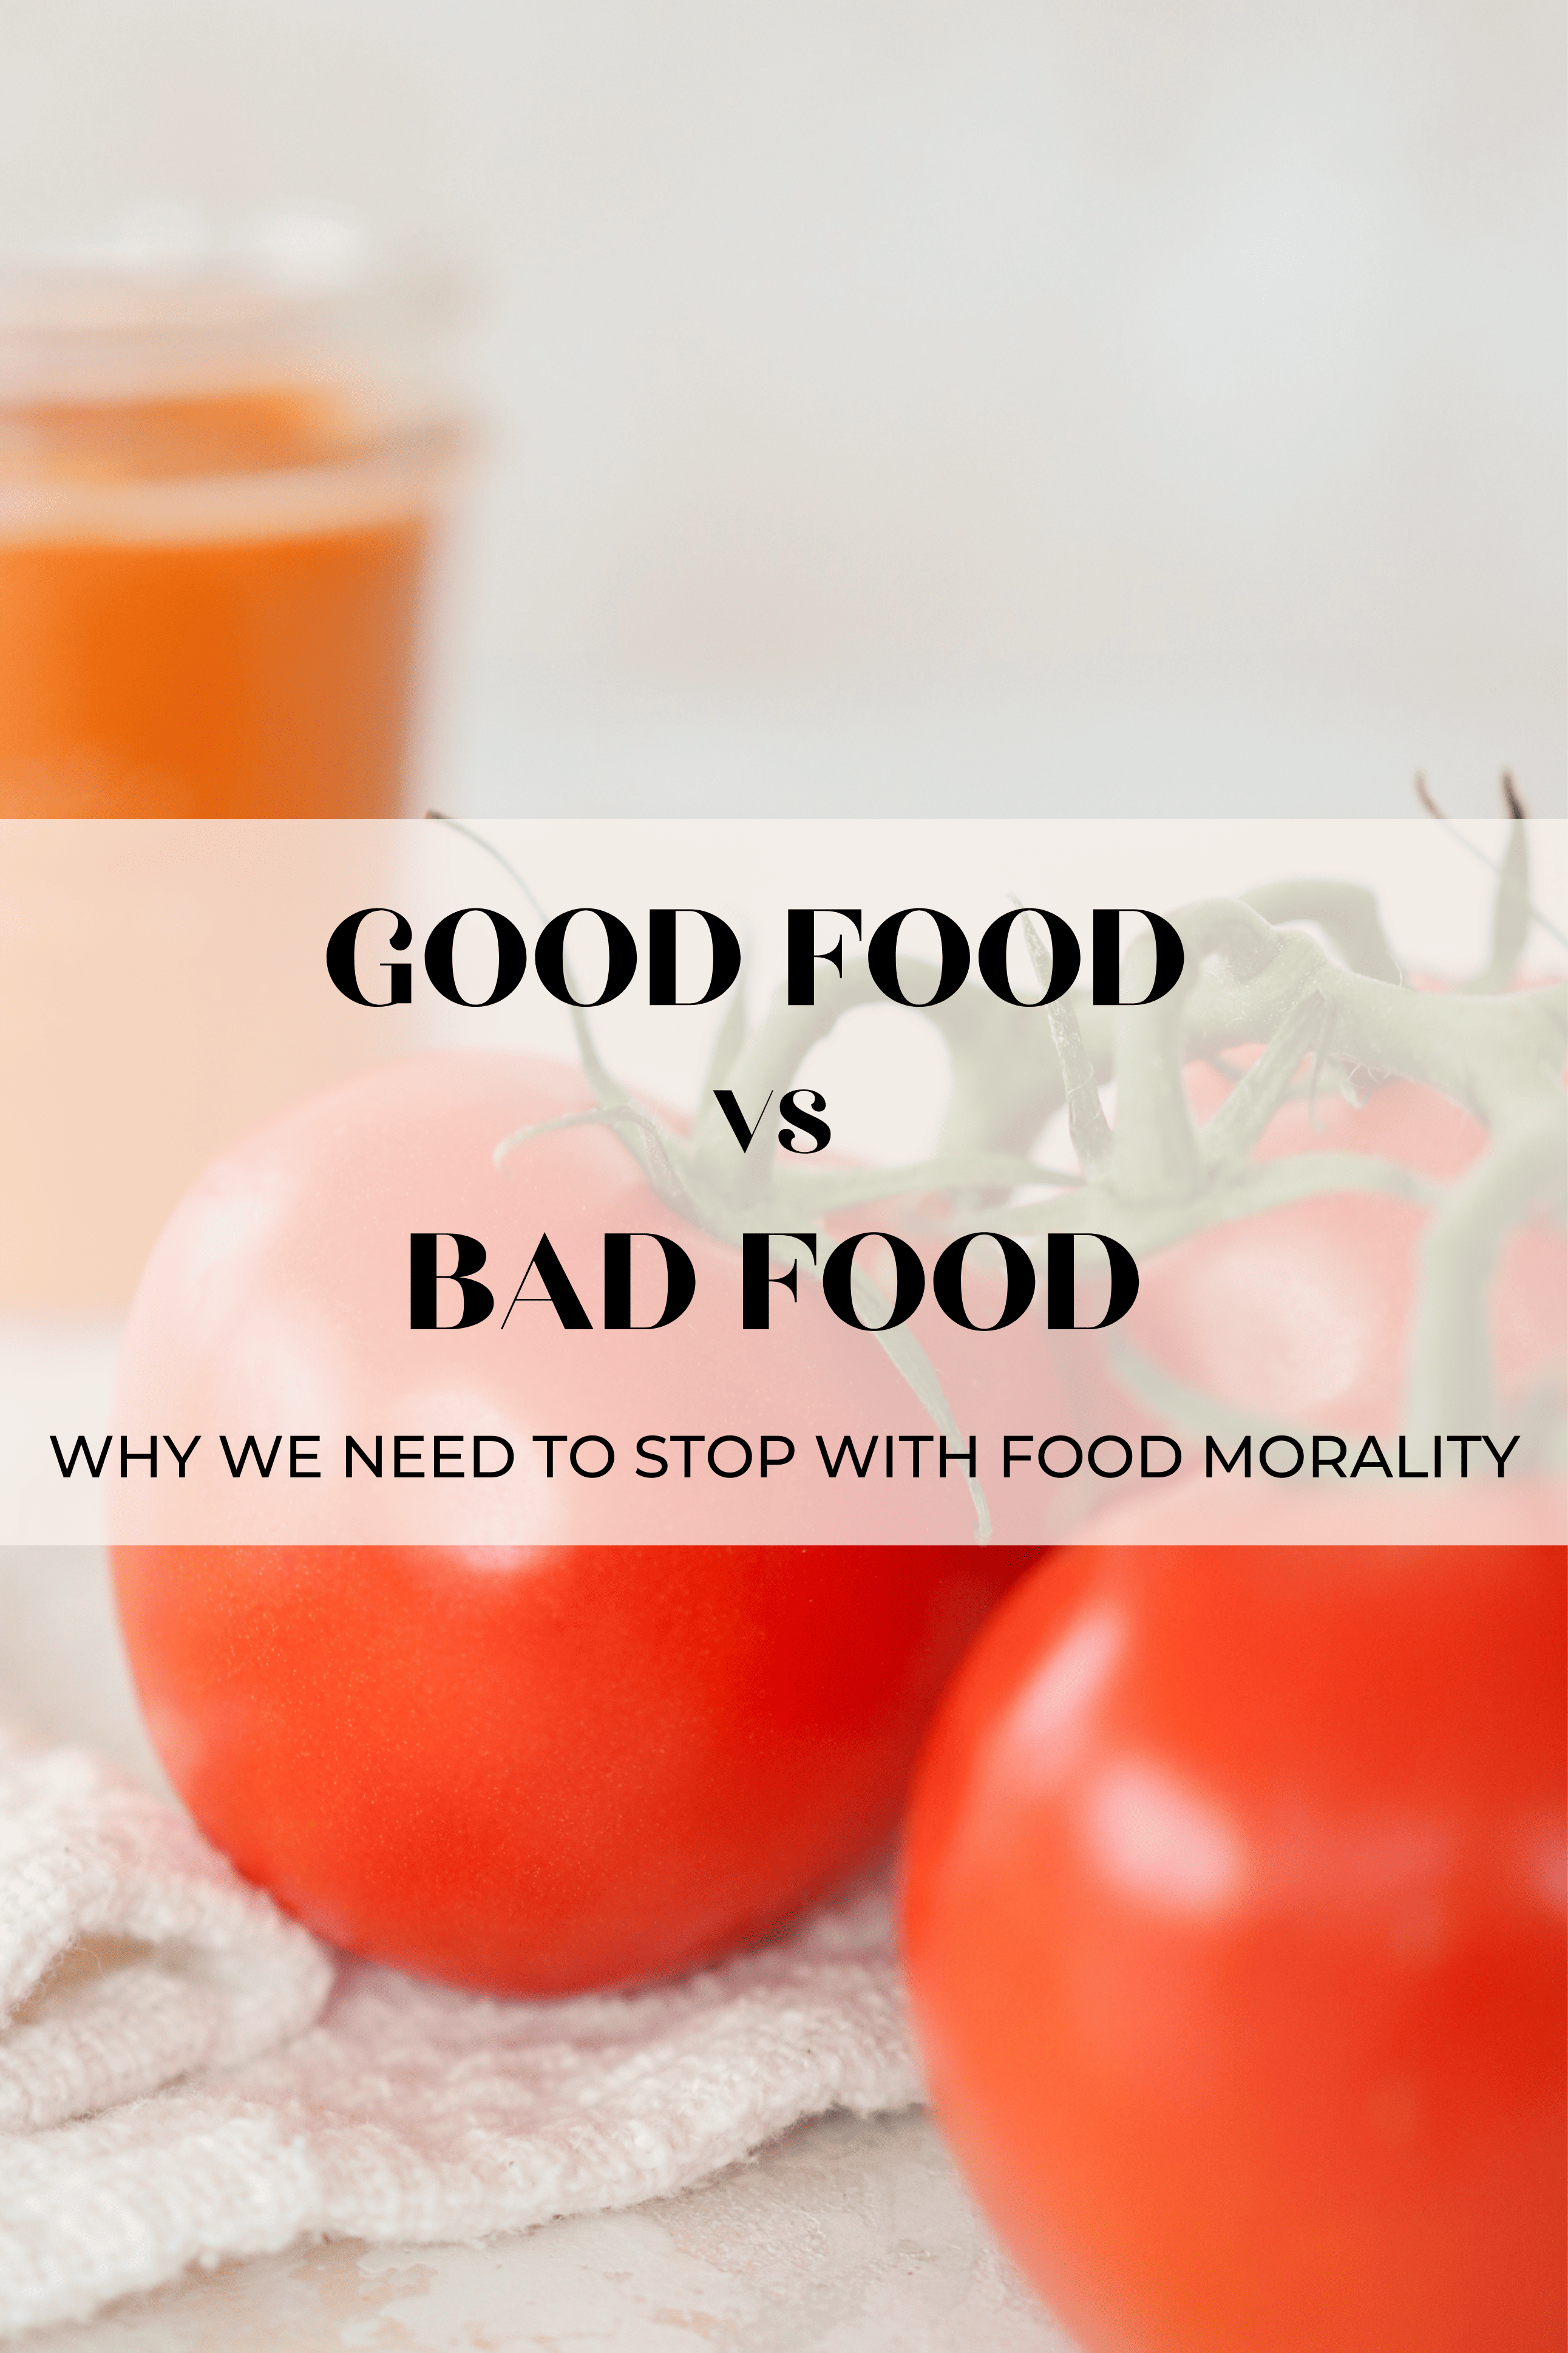 junk food vs healthy food slogans